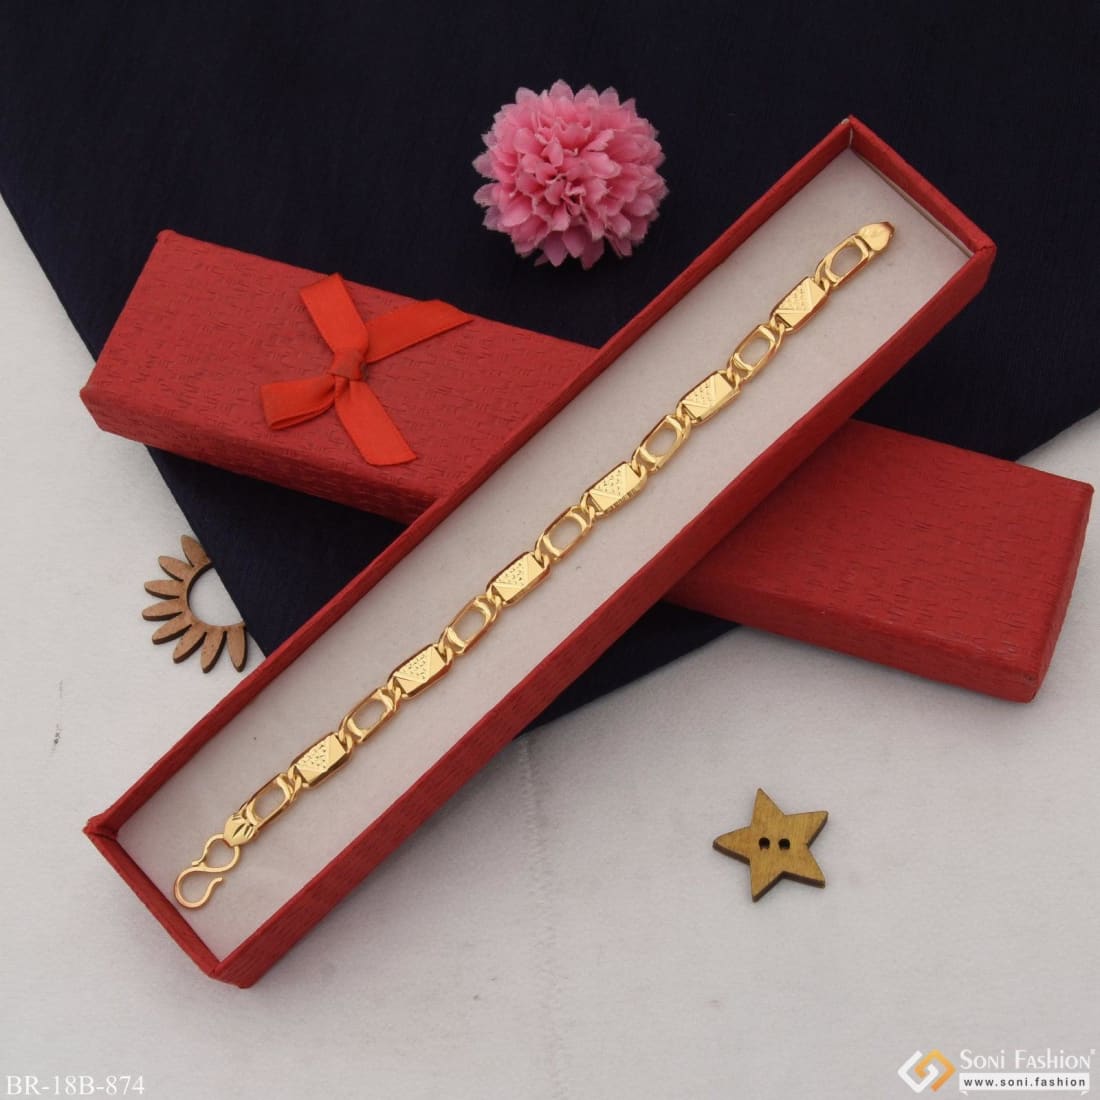 Gold Bracelet - Gold Jewelry - Layered Chain Bracelet - Lulus